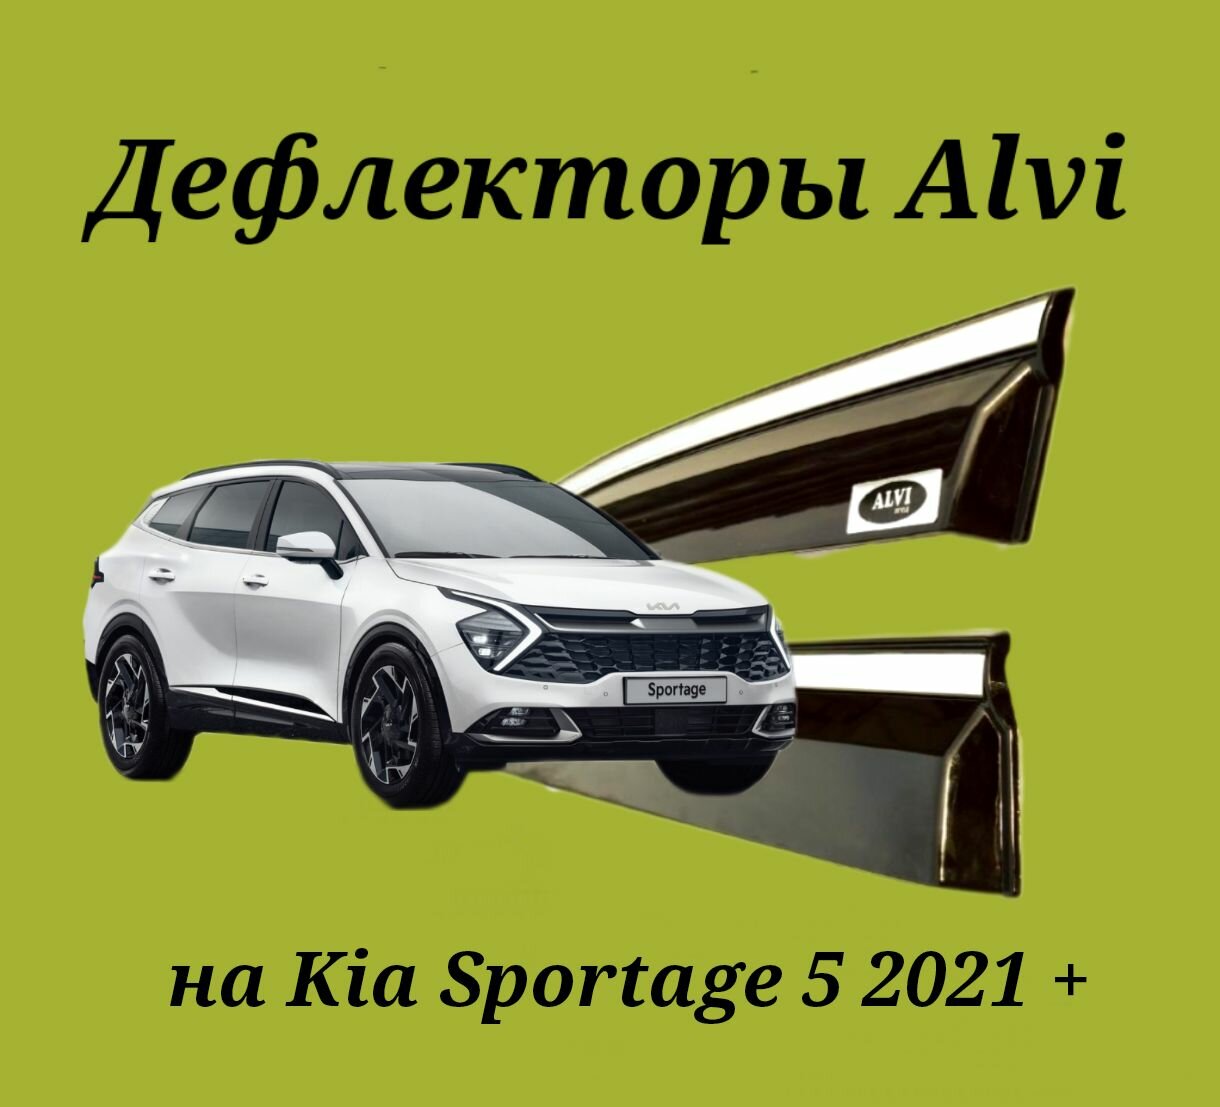 Дефлекторы Alvi на Kia Sportage 5 2021 +с молдингом из нержавейки